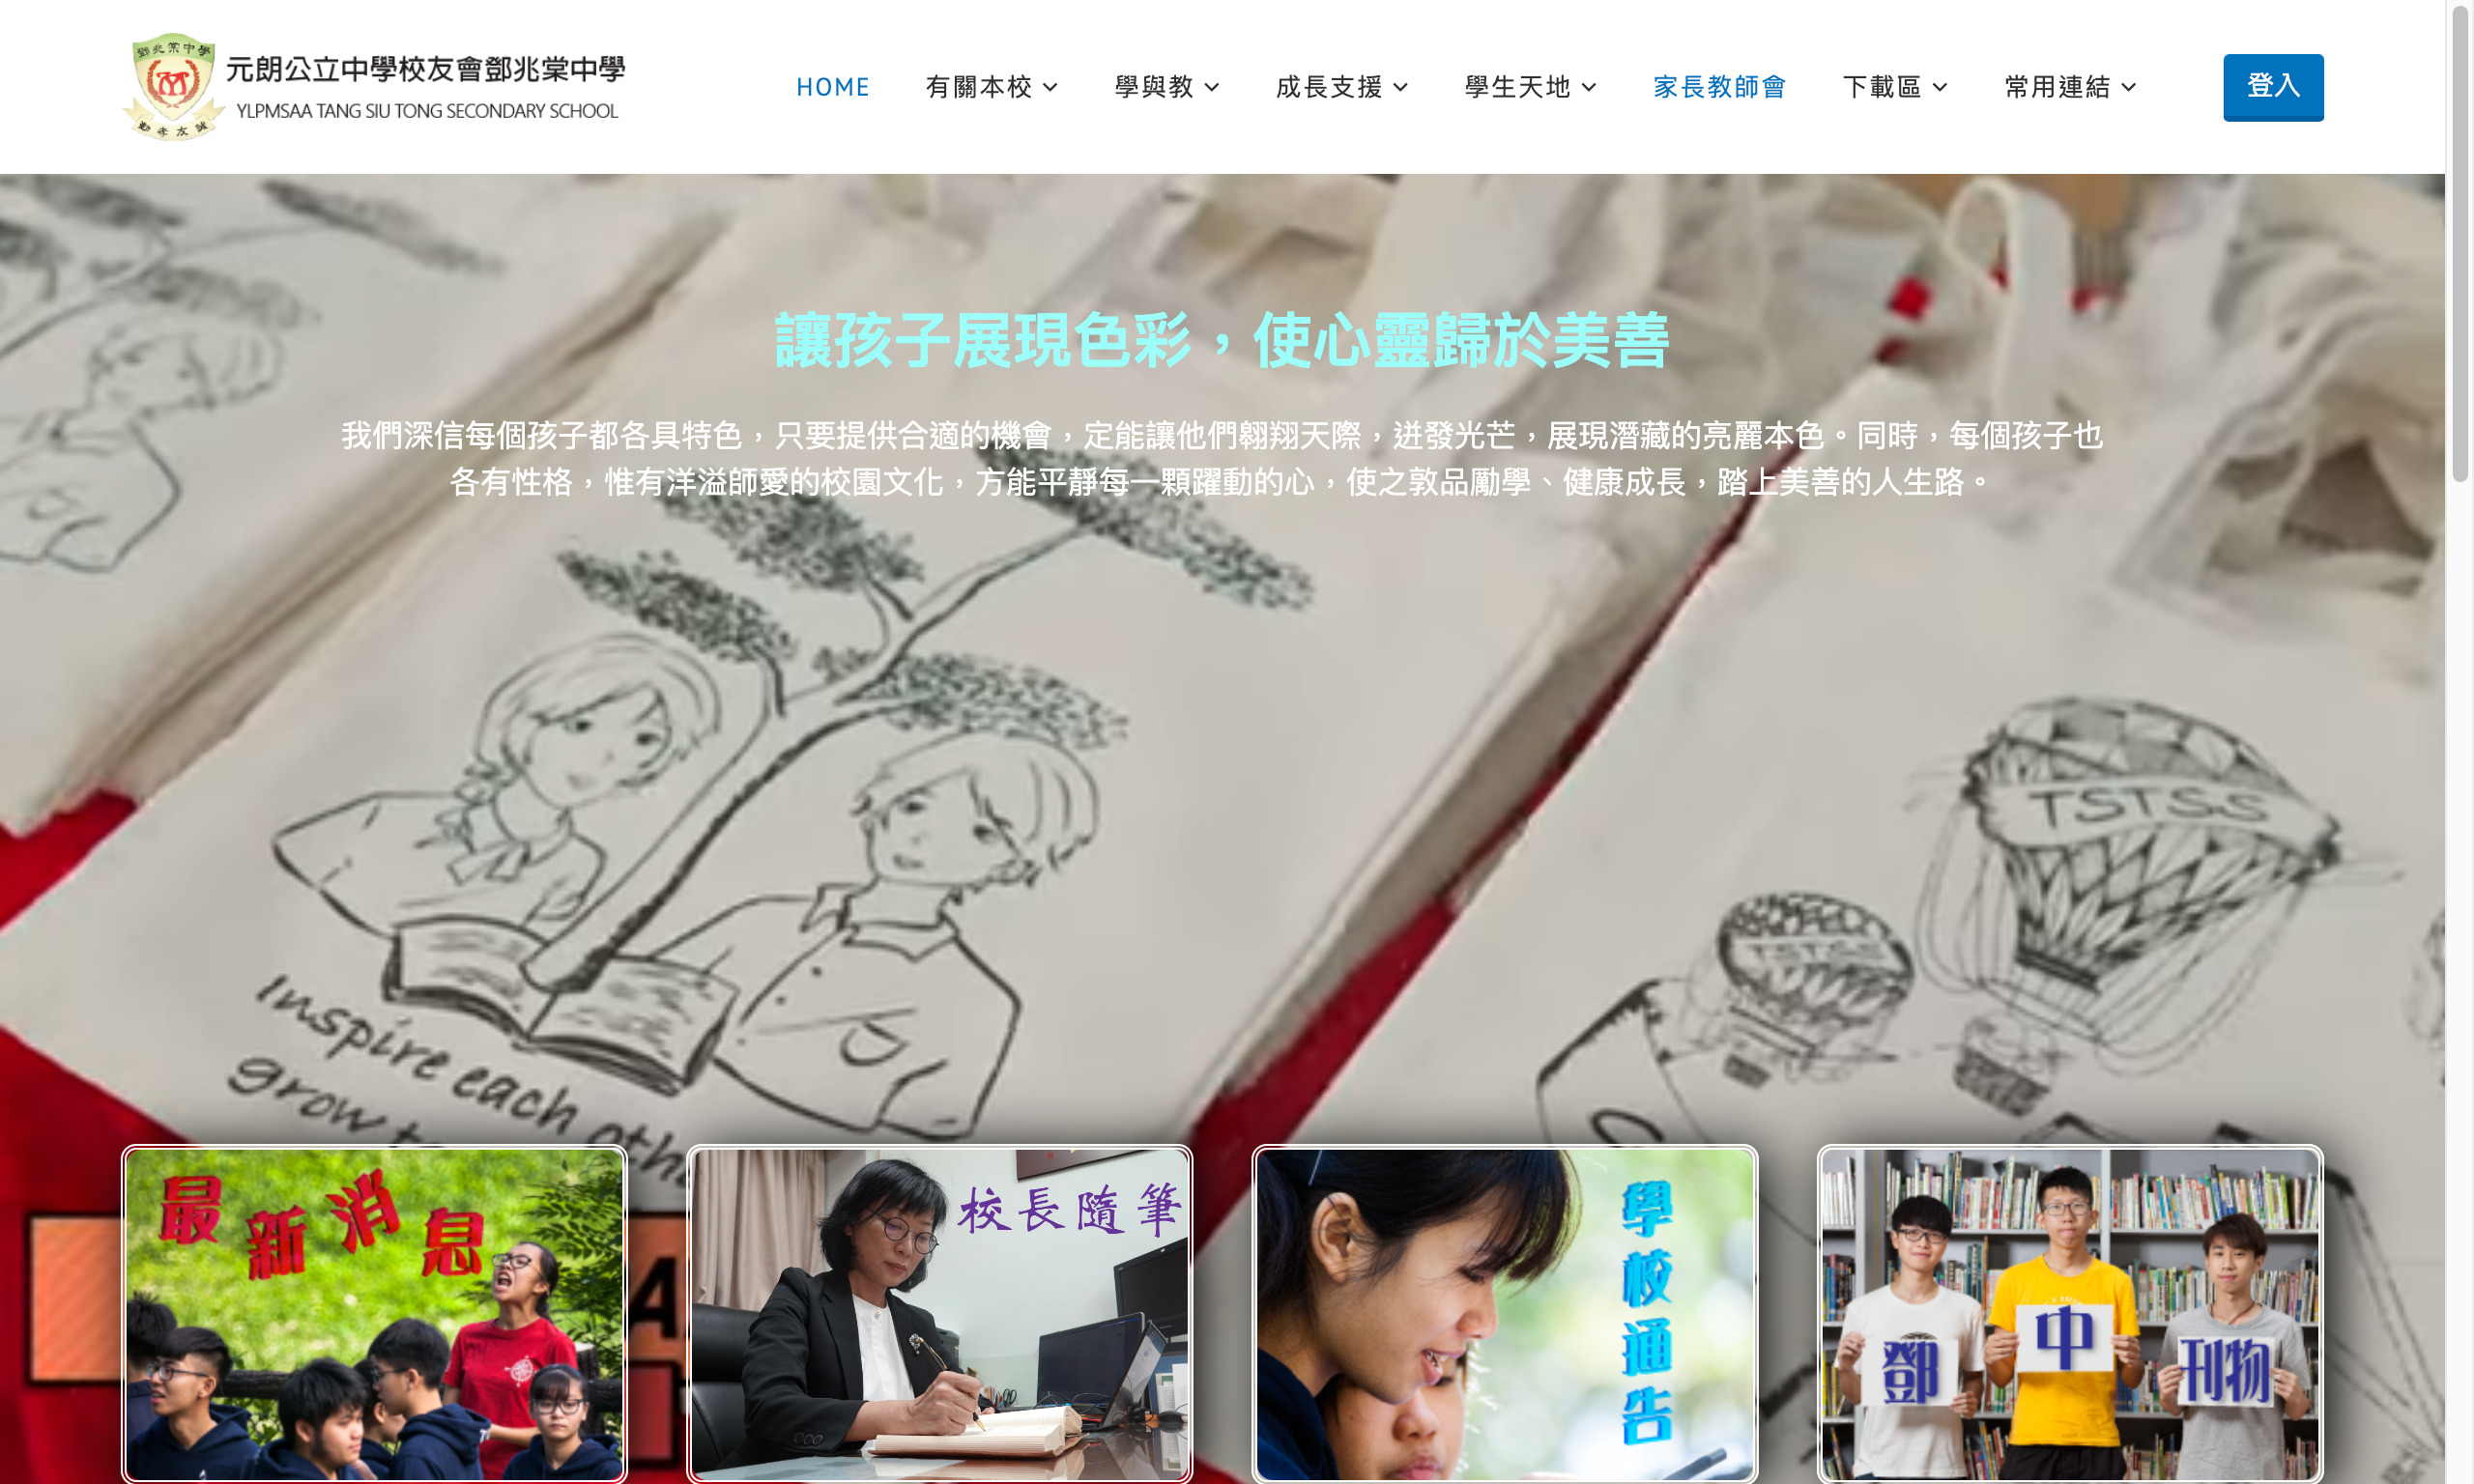 Screenshot of the Home Page of YLPMSAA Tang Siu Tong Secondary School